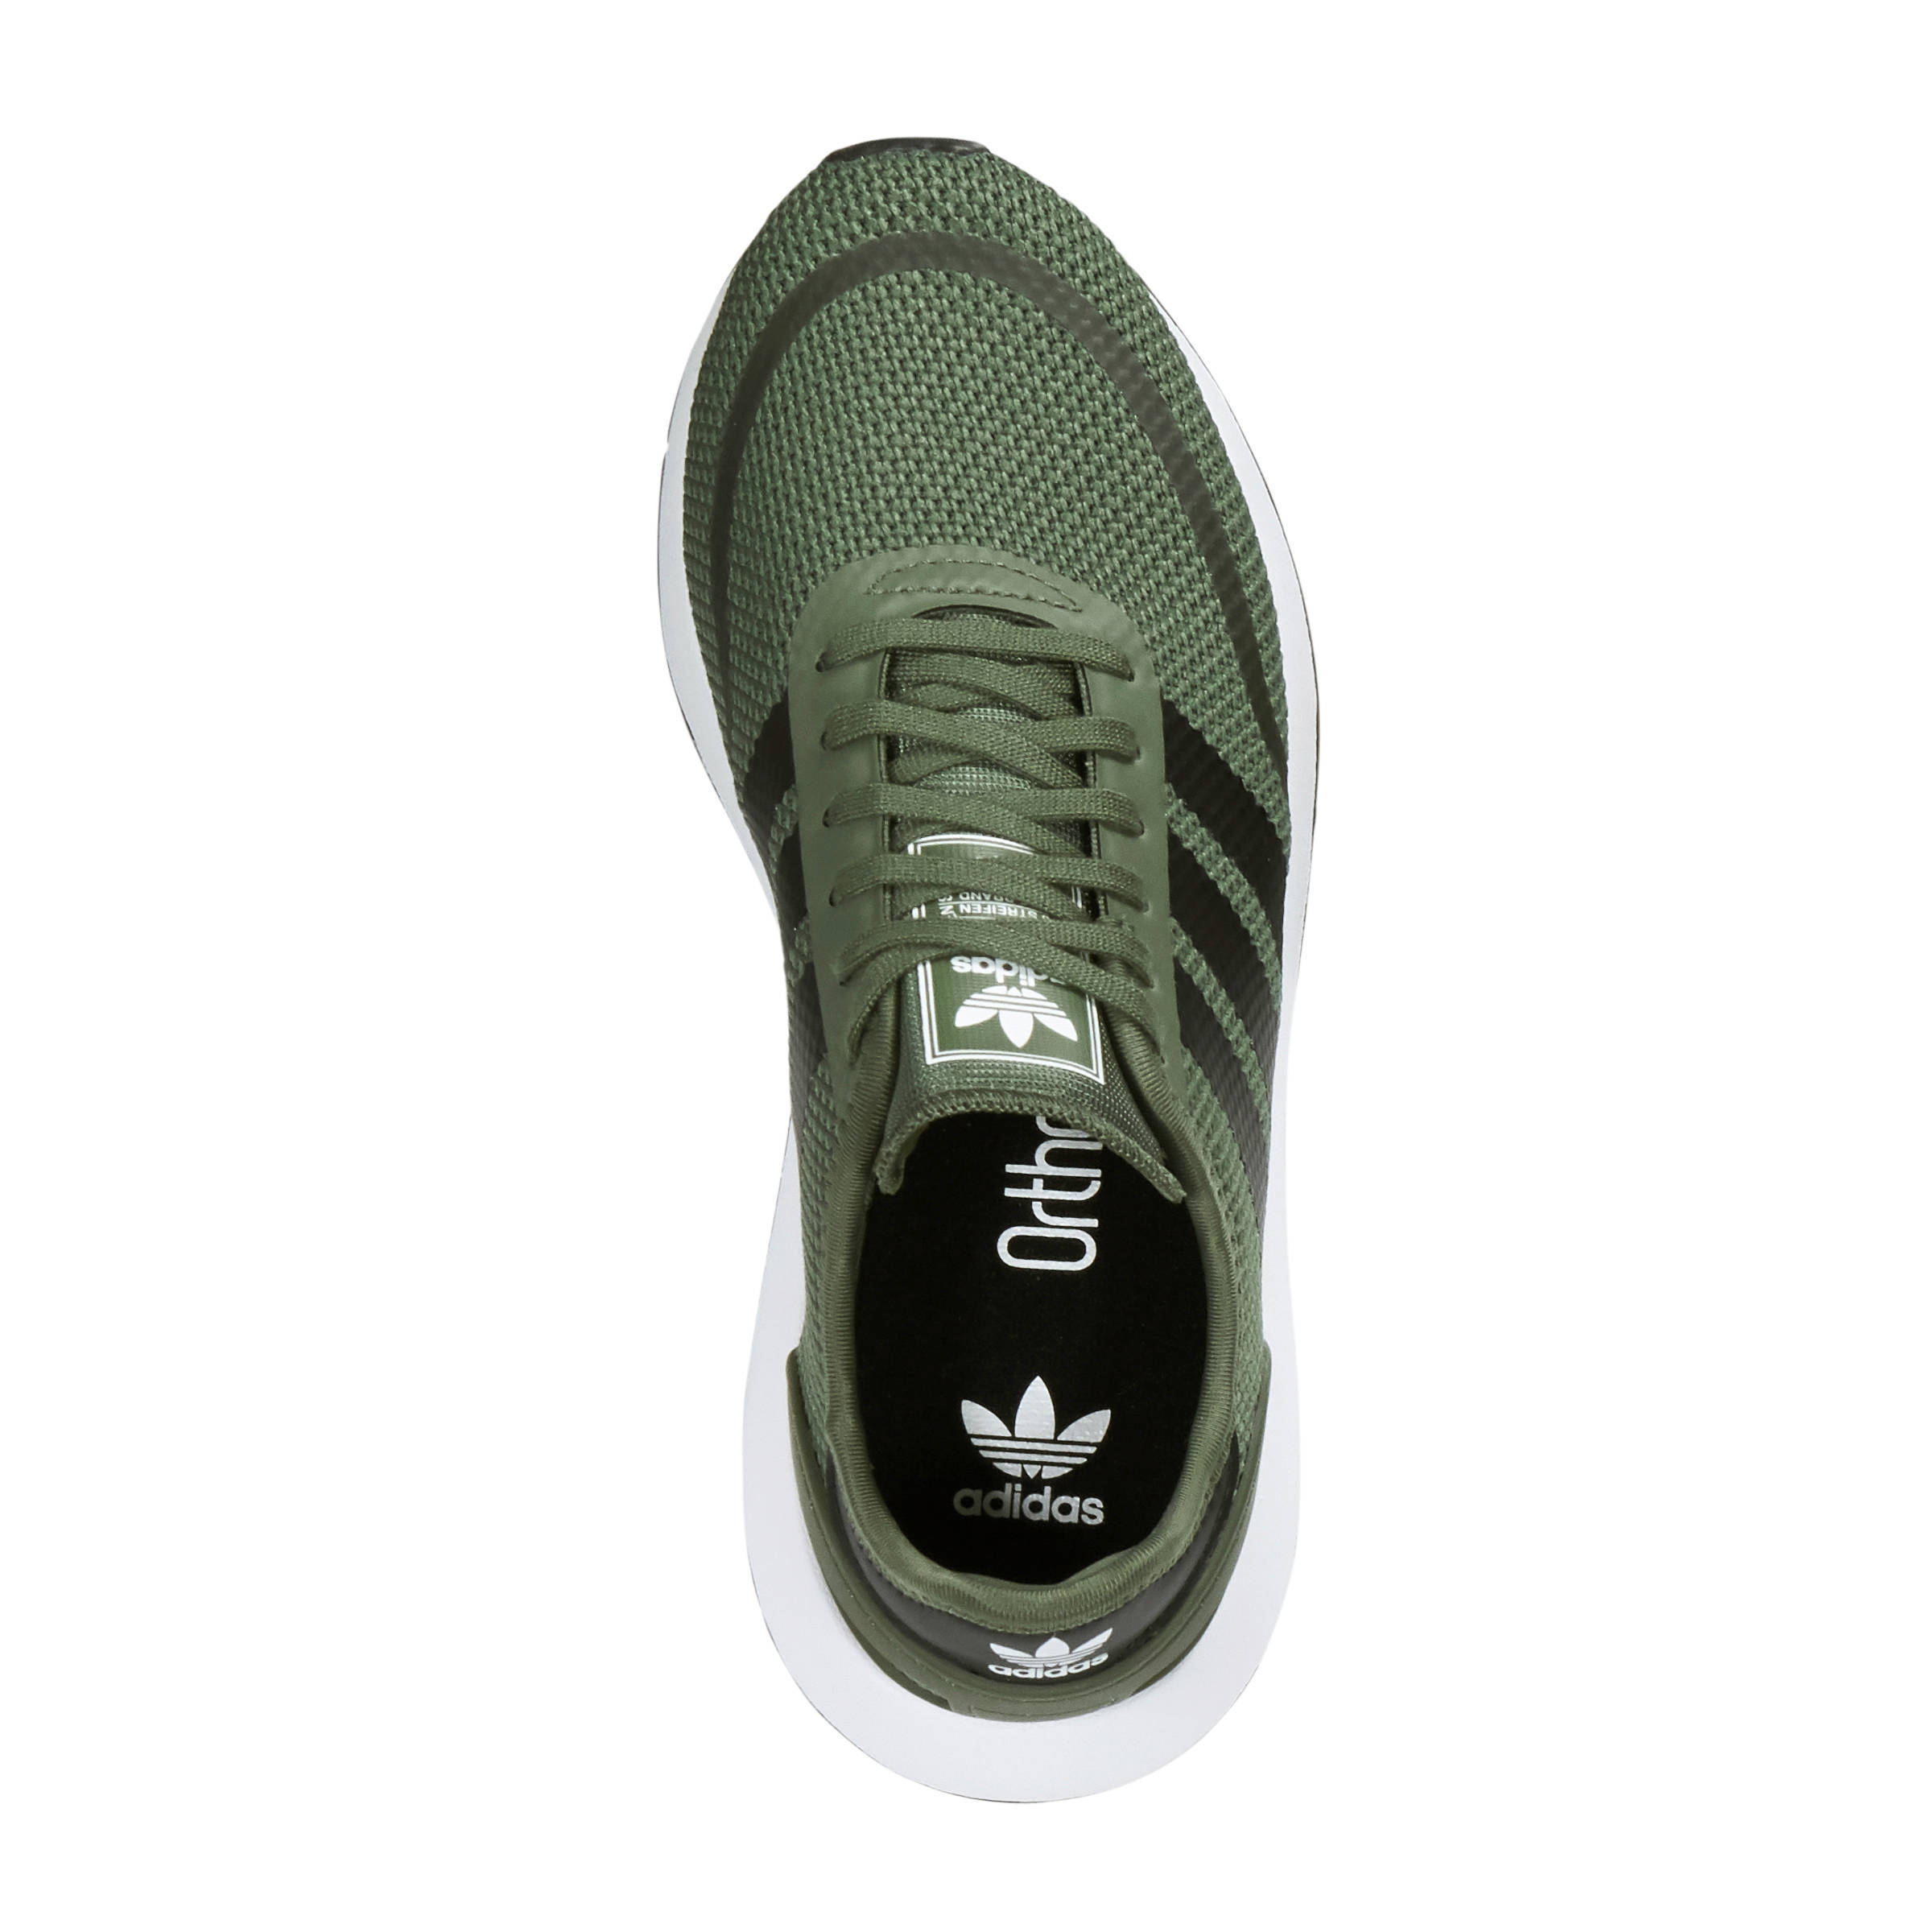 adidas schoenen groene strepen